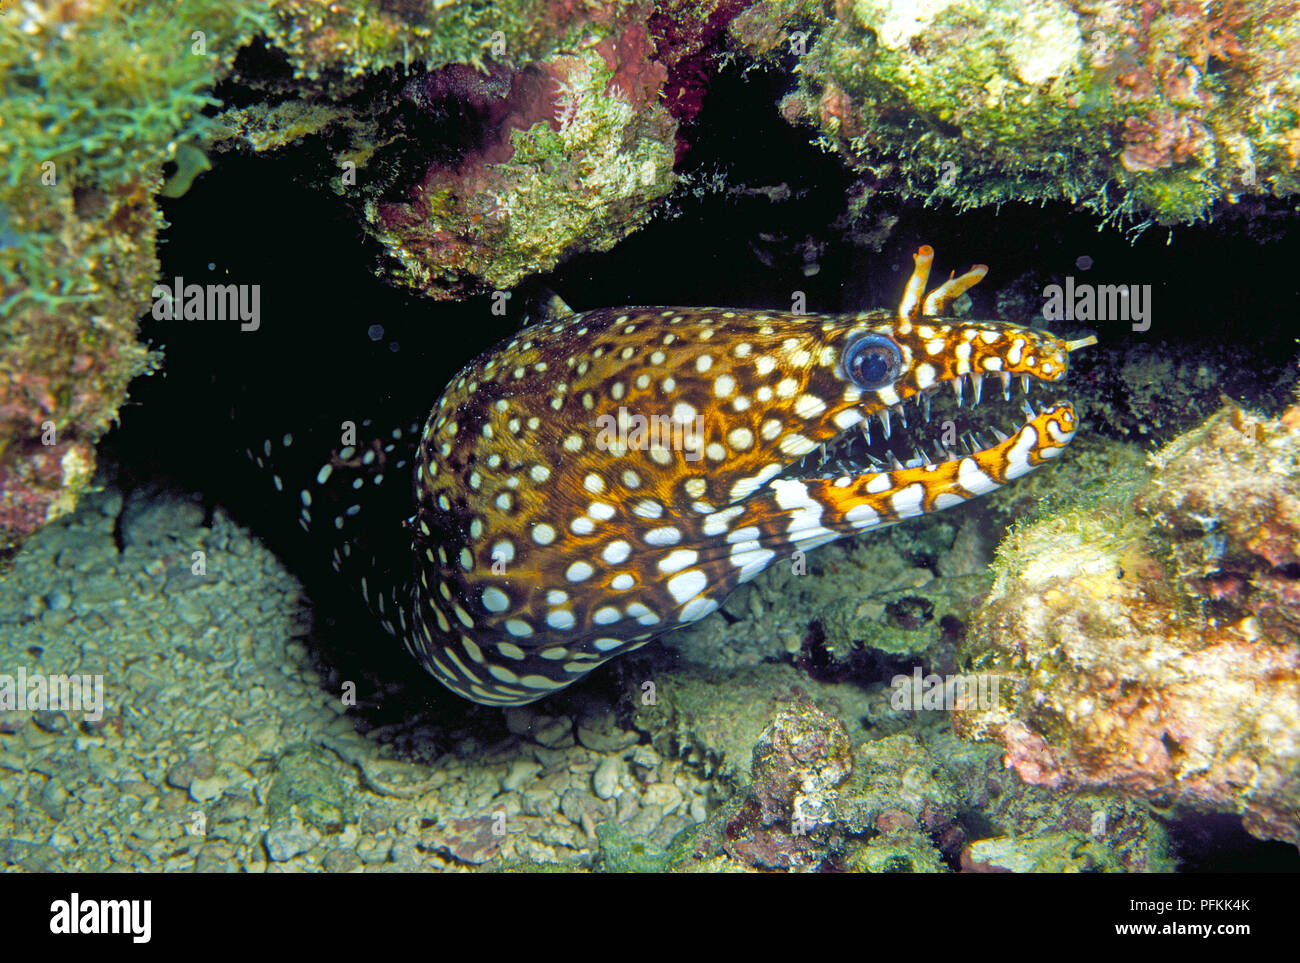 (Drachenmuraene Enchelycore pardalis) im Korallenriff, Hawai | Leopard Muränen oder Dragon Moray Eel (Enchelycore pardalis) im Coral Reef, Hawaii Stockfoto